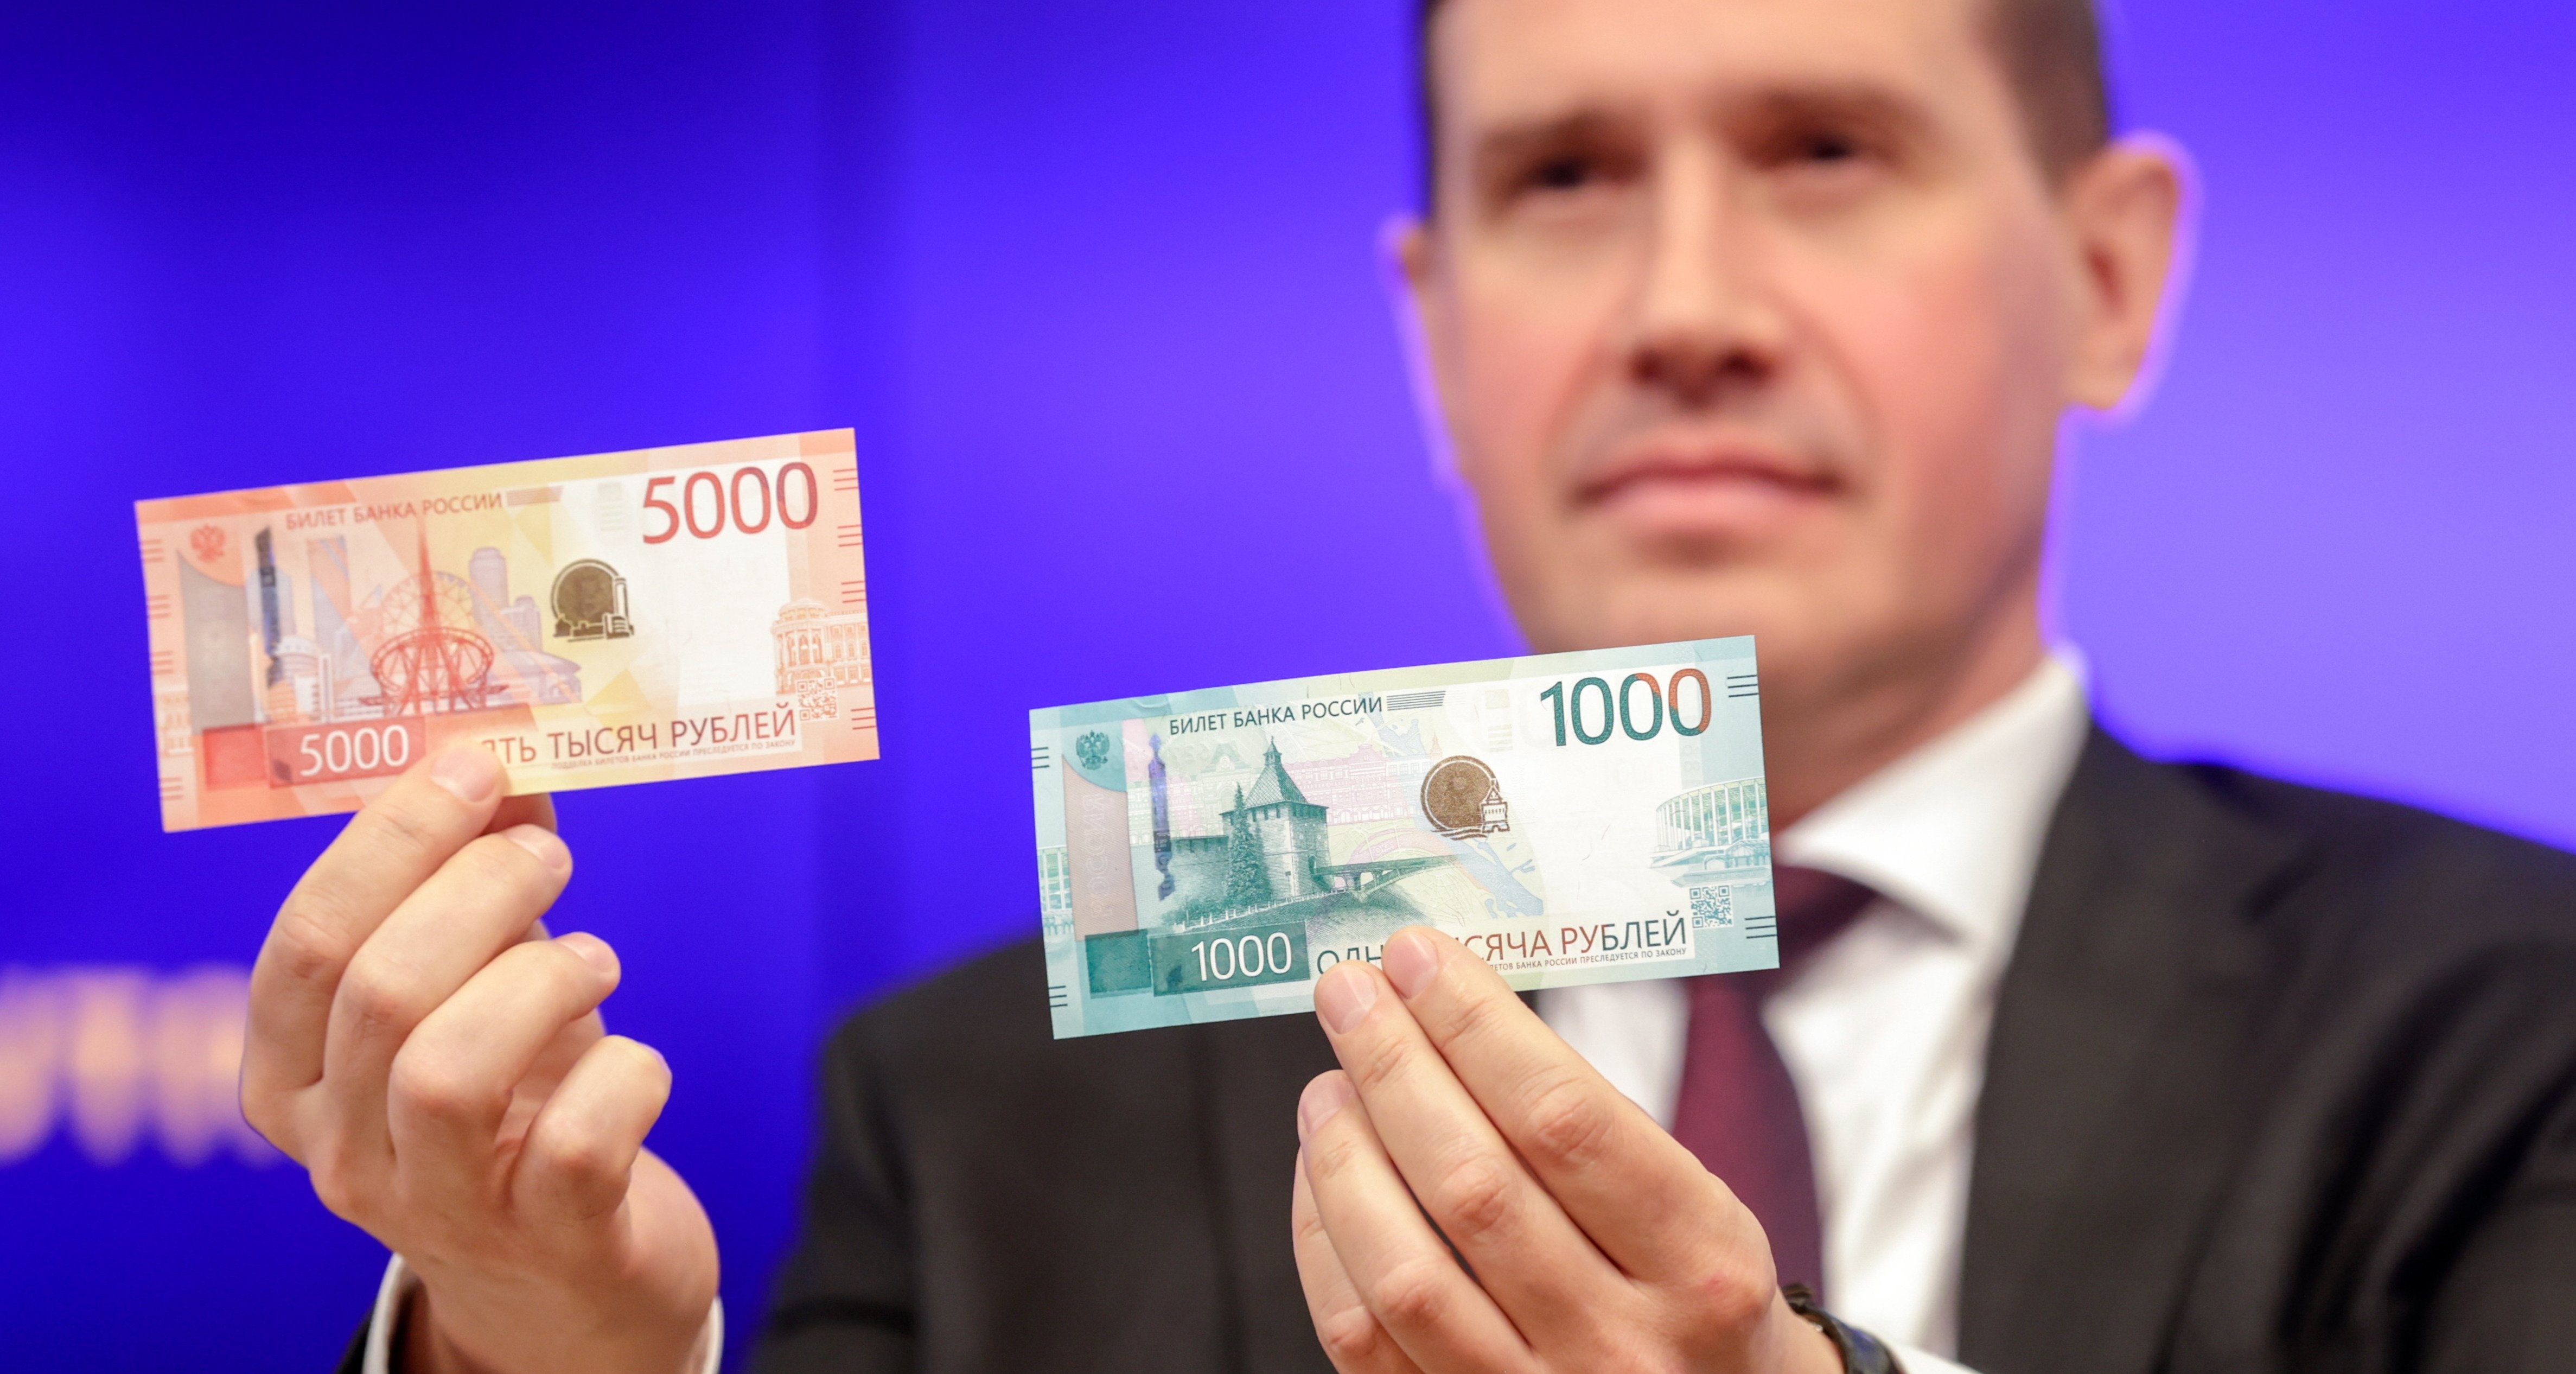 ЦБ остановил выпуск банкноты в 1000 рублей после критики РПЦ